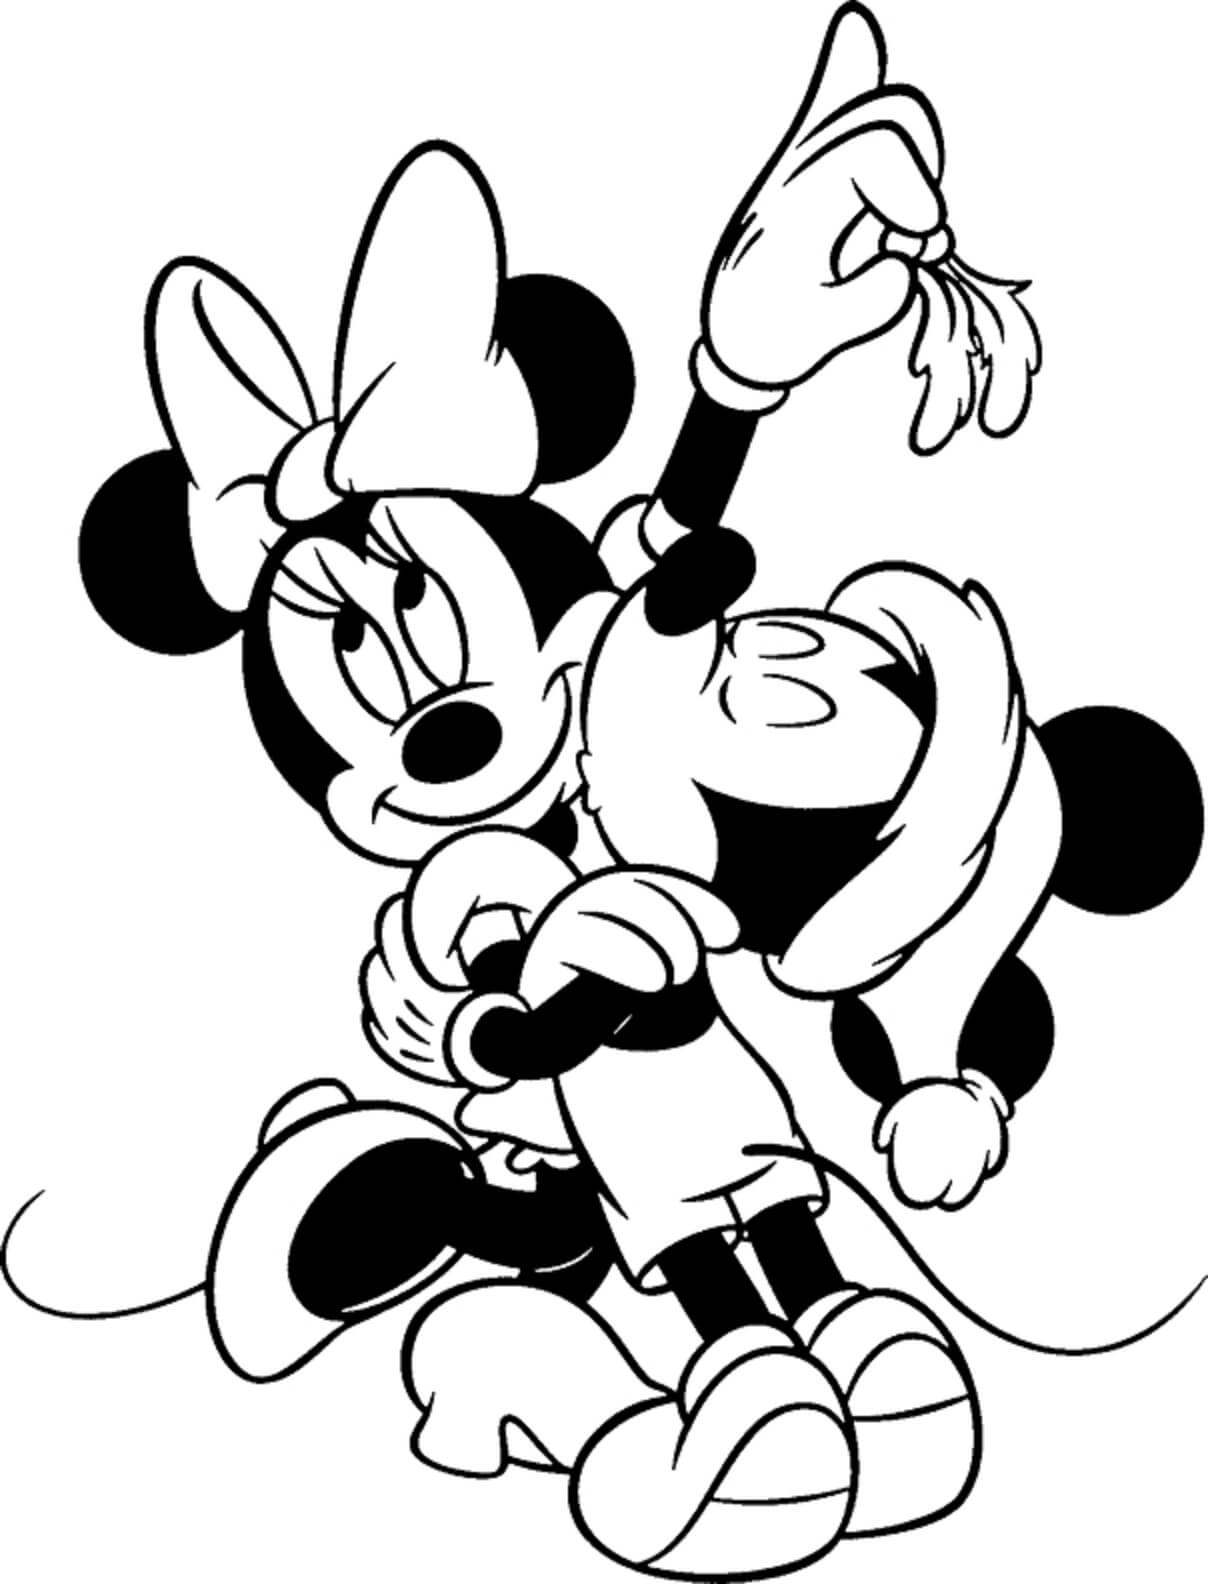 Mickey et Minnie à Noël coloring page